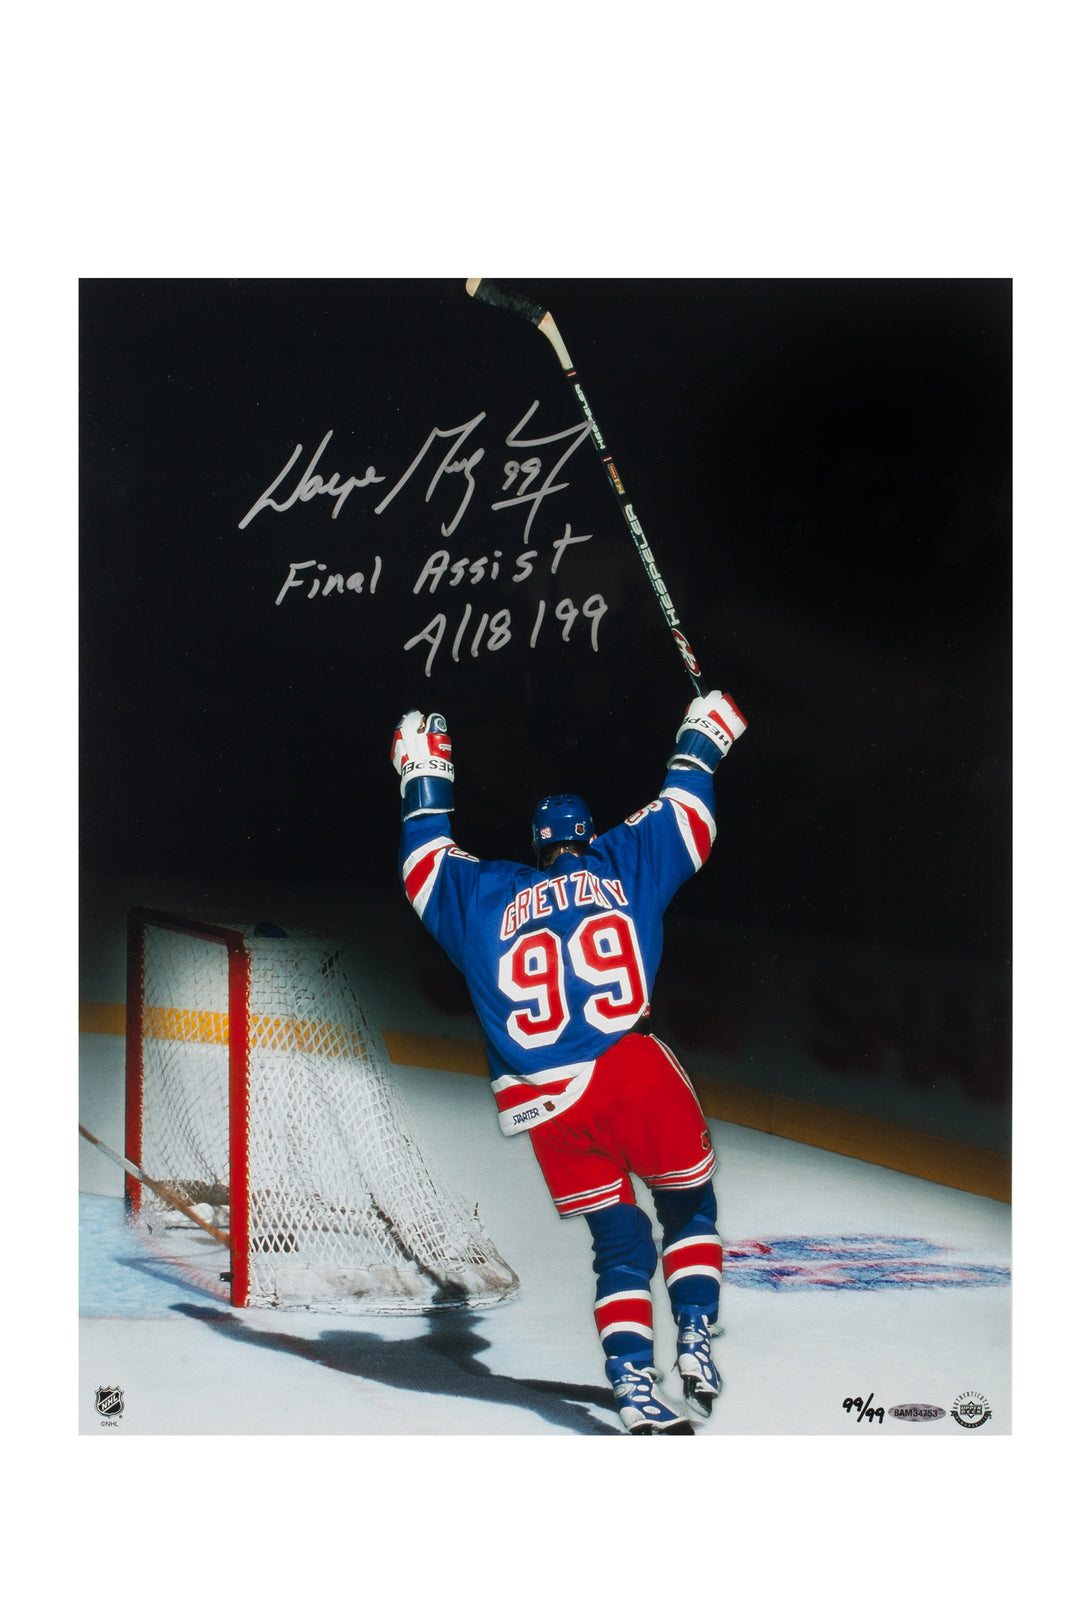 Wayne Gretzky Signed & Inscribed 16X20 Final Assist 4/18/99